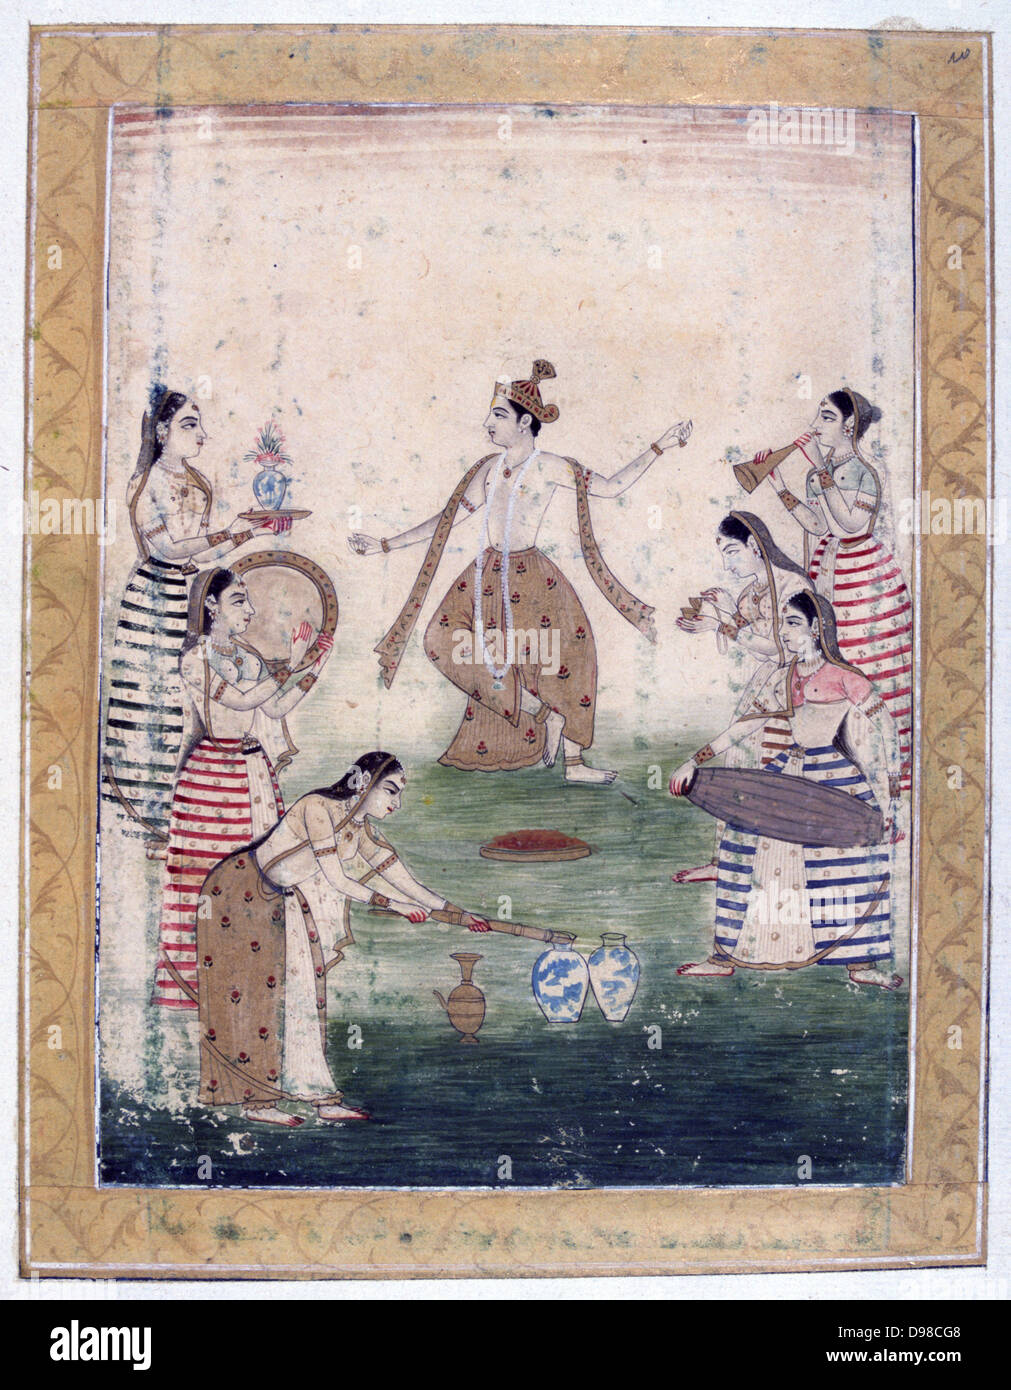 Album of Ragamala. Vasanta (Spring): Krishna dances to playing of Gopis, cow-herding young women devoted to Krishna. 19th century Indian miniature, Rajasthan School with Mughul influence. Stock Photo